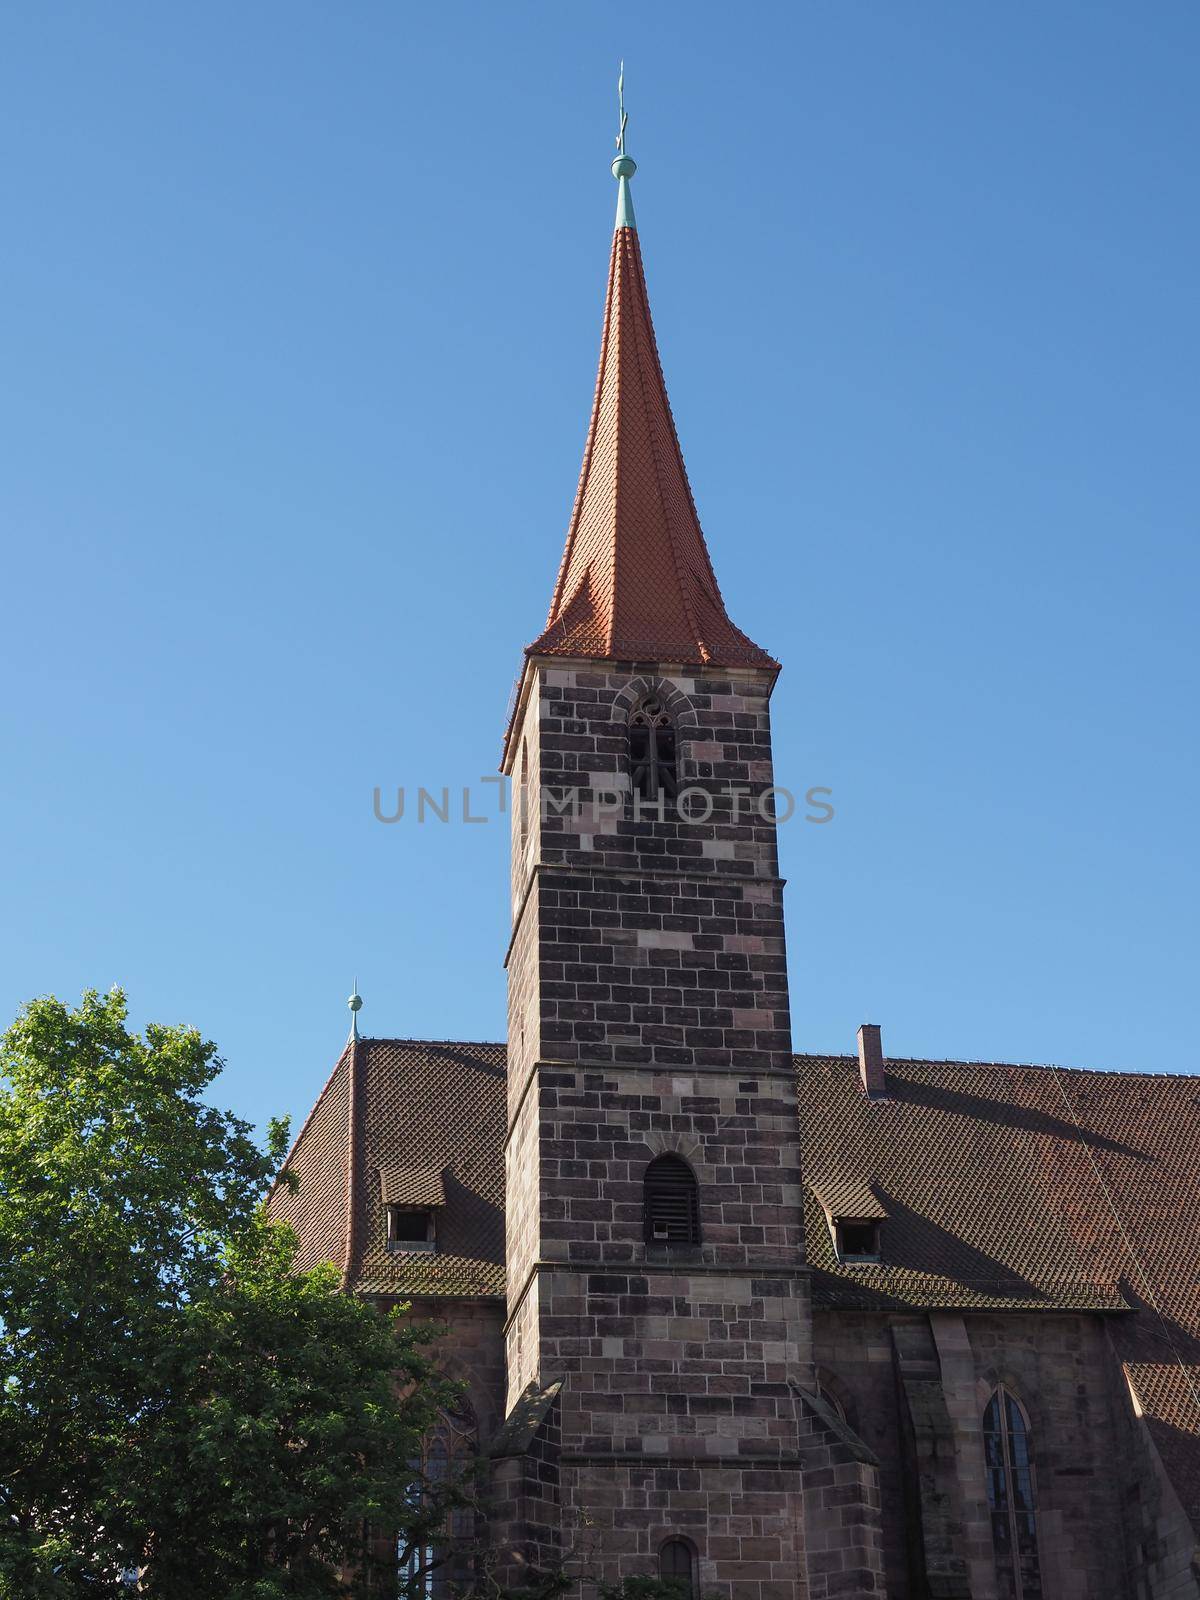 St Jakob, translation St James, evangelical lutheran church in Nuernberg, Germany